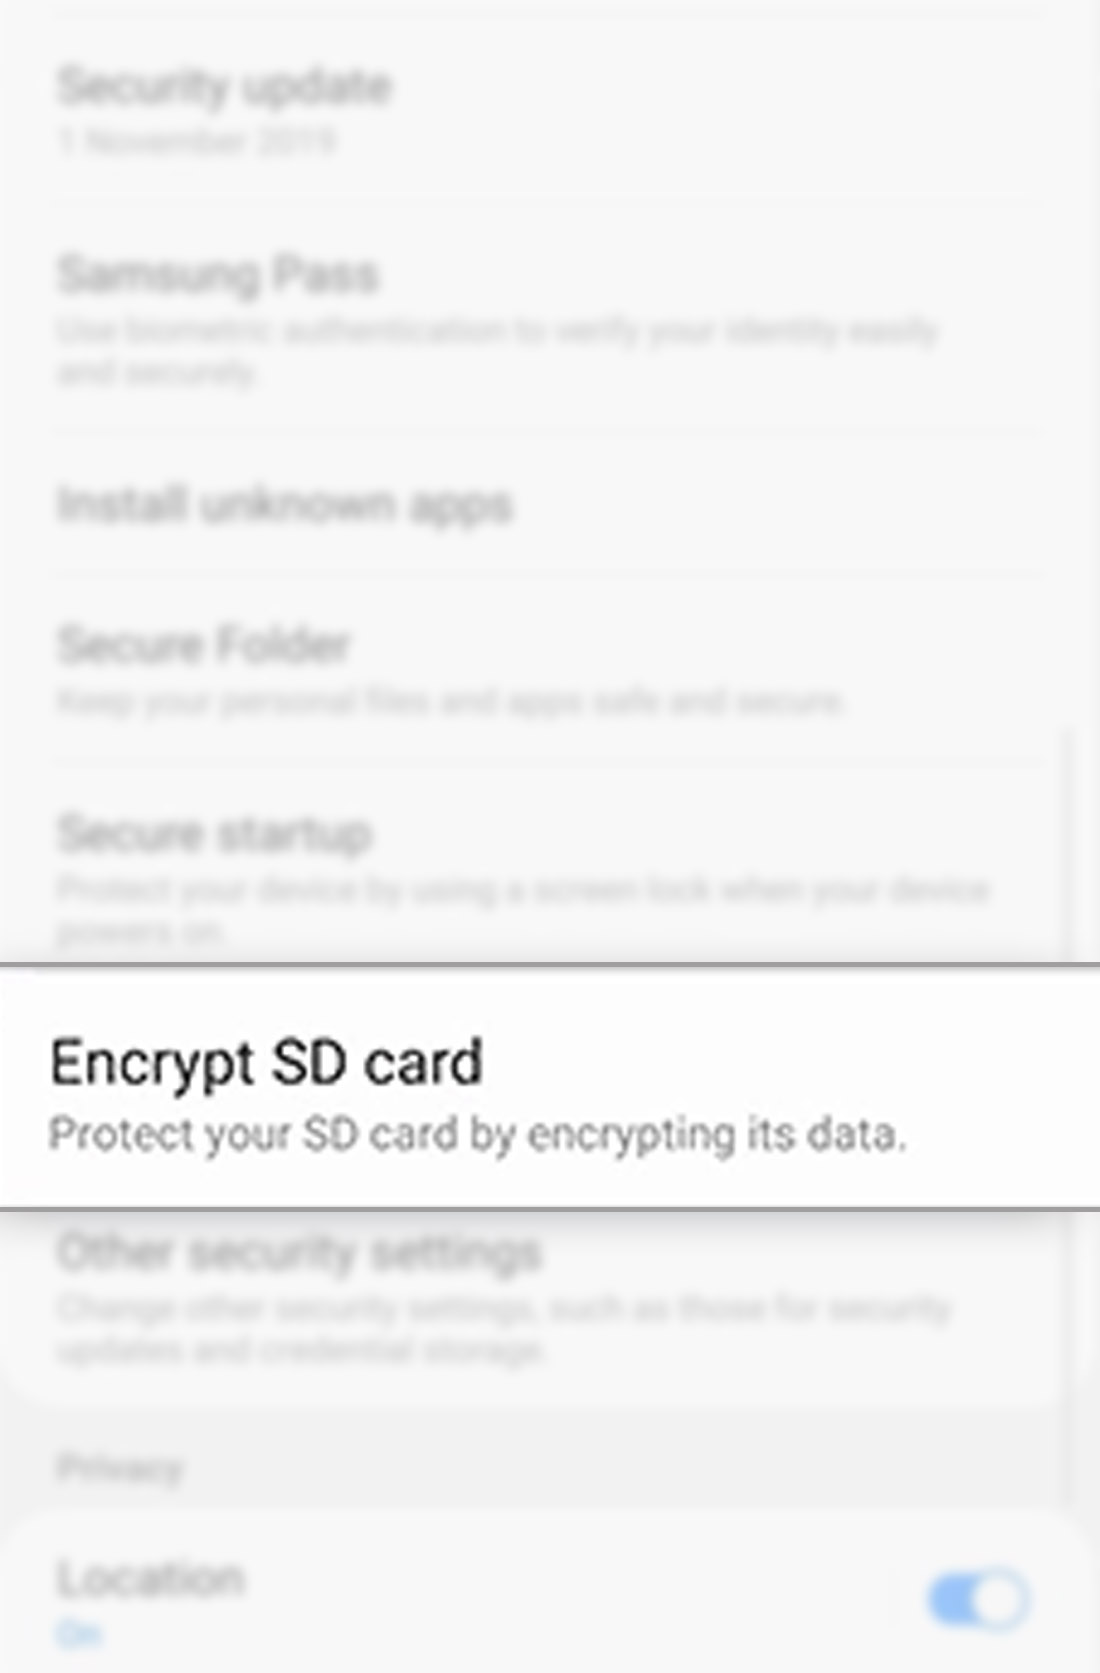 encrypt-decrypt sd card on galaxy s20 - encrypt